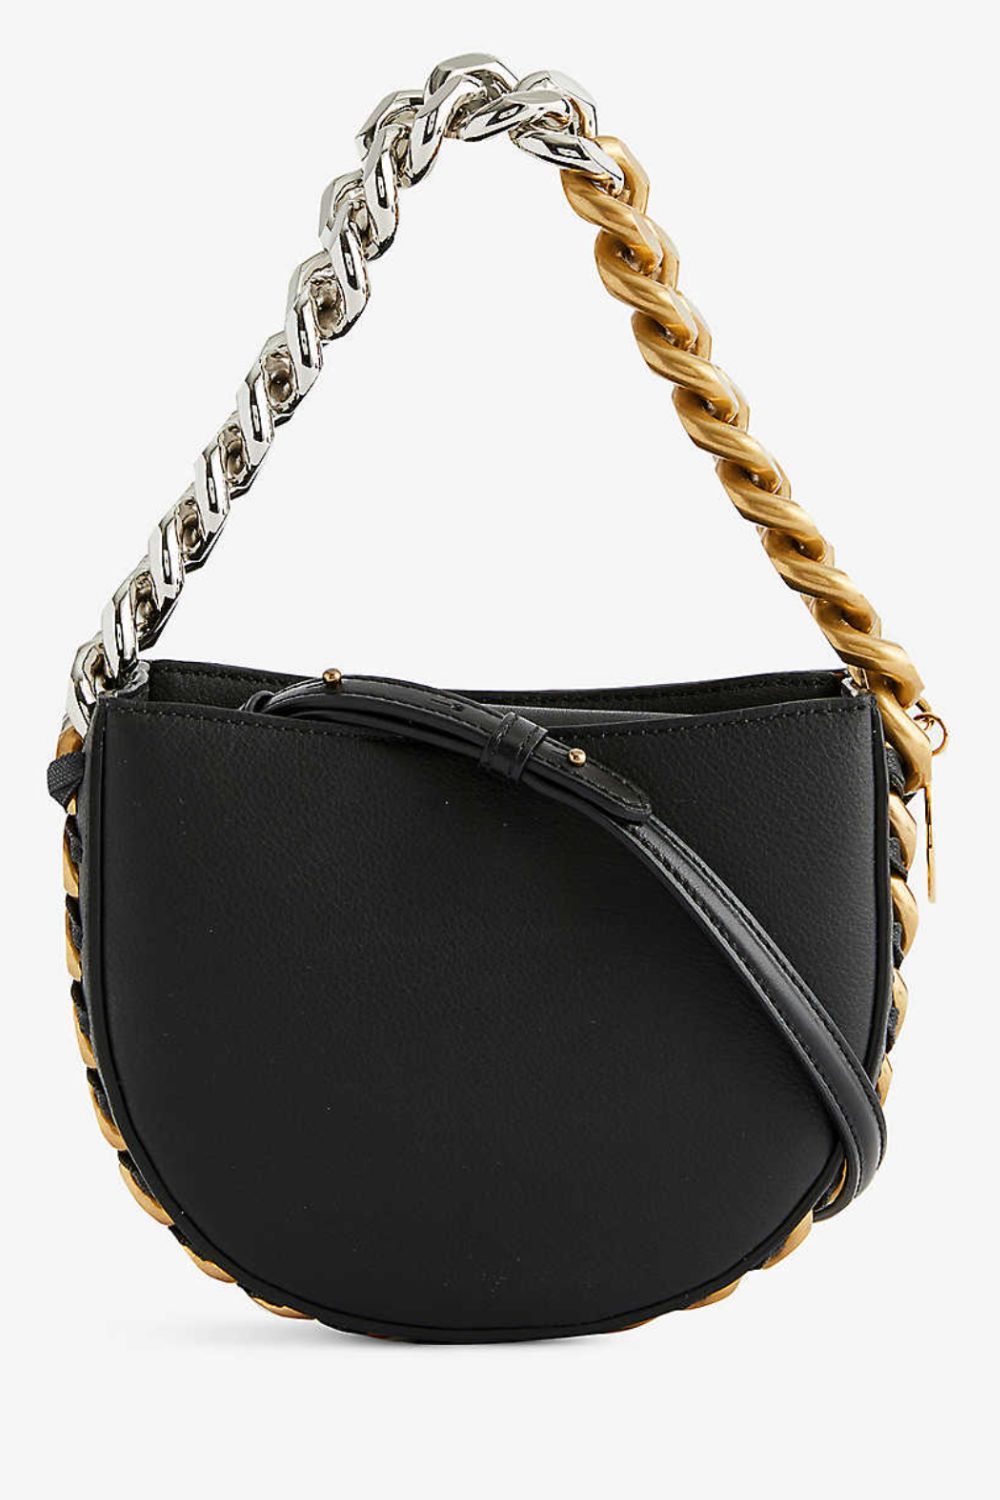 The Best Designer Handbags 2022 From Prada to Bottega Veneta | Marie ...